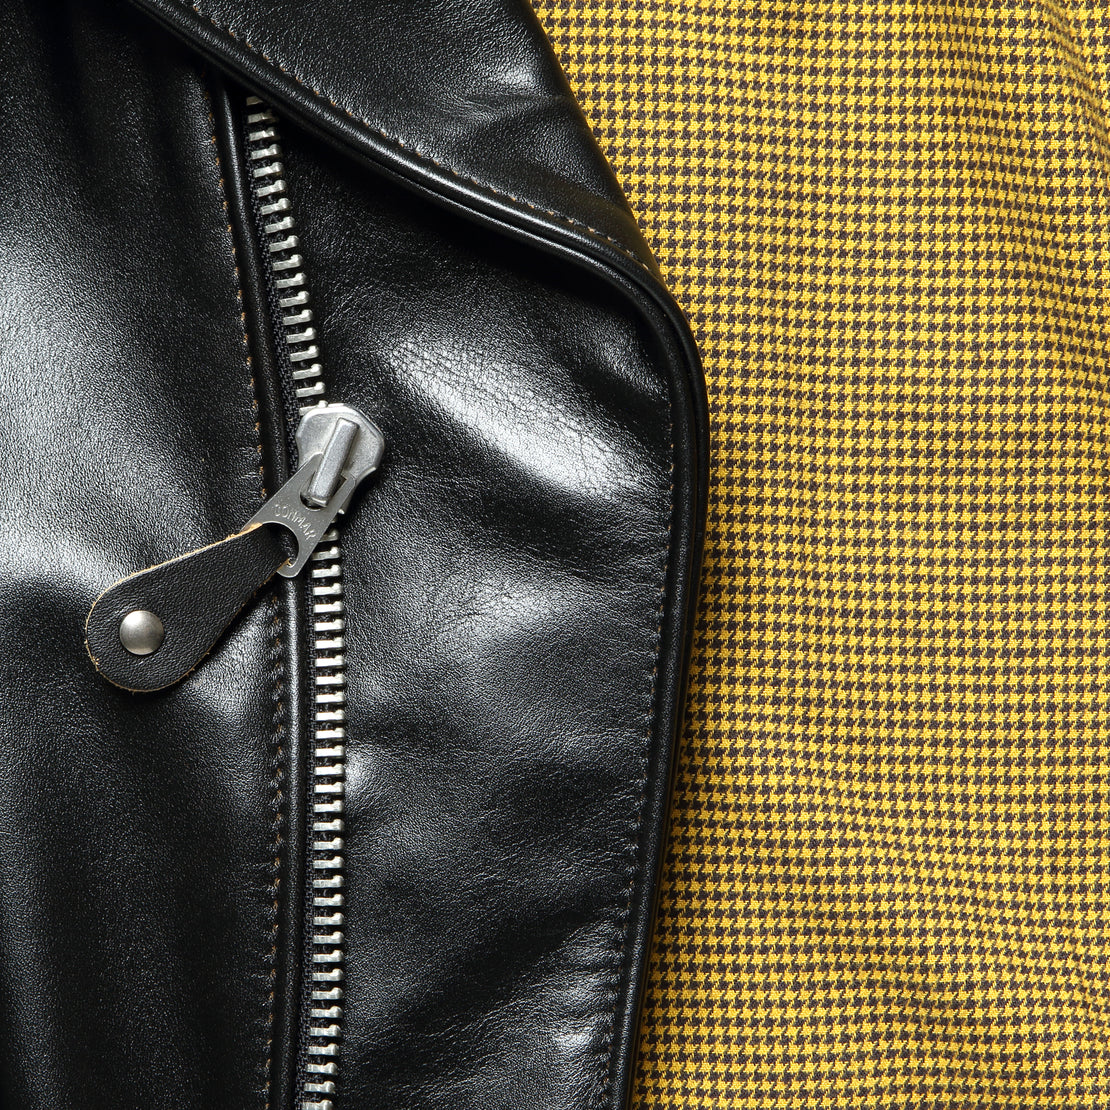 Perfecto Moto Jacket - Black - Schott - STAG Provisions - Outerwear - Coat / Jacket